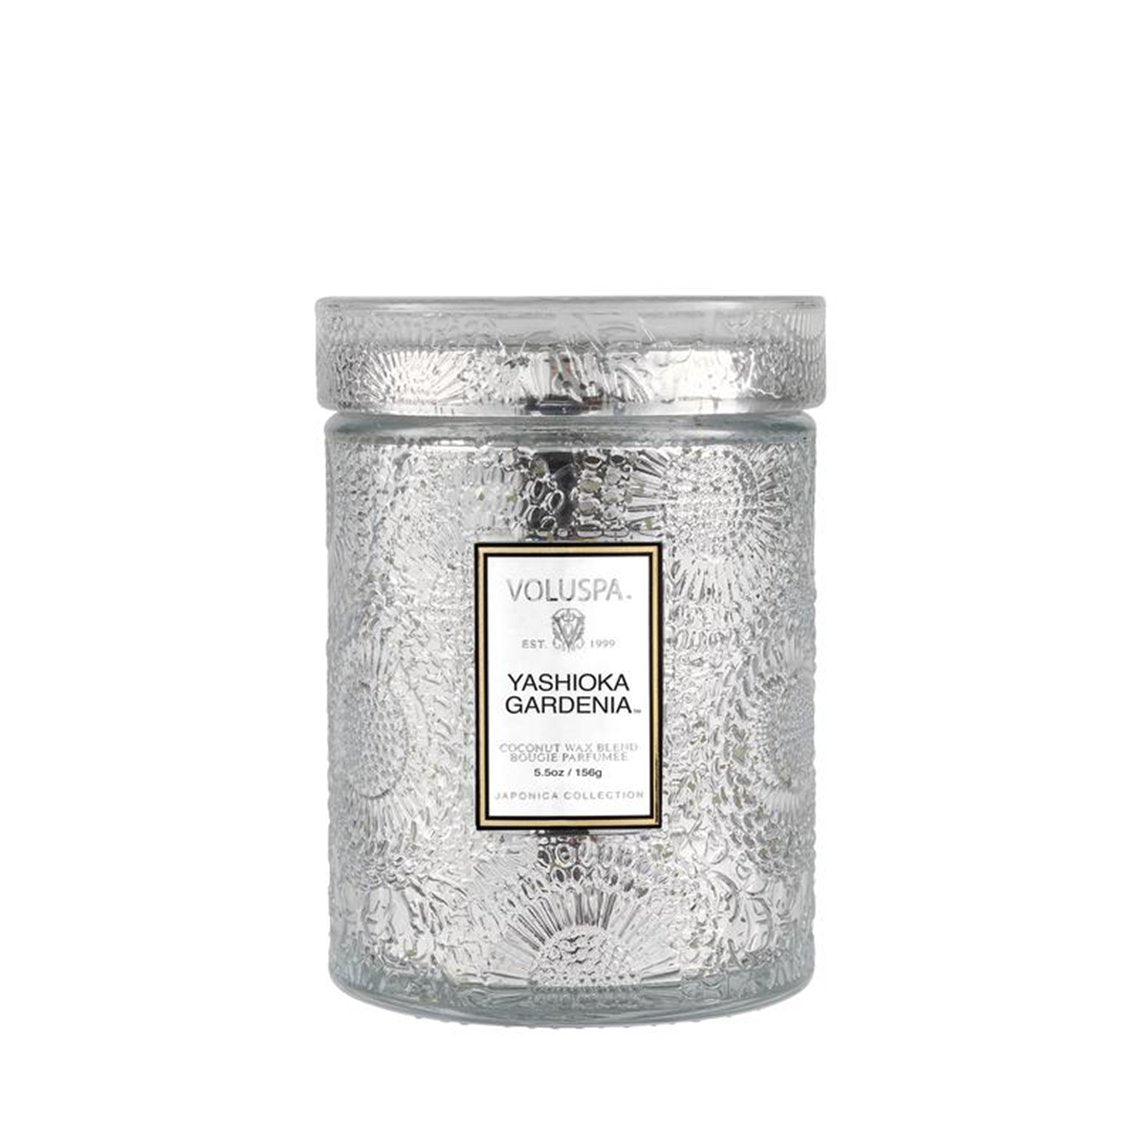 VOLUSPA Yashioka Gardenia 50hr Candle Jar.